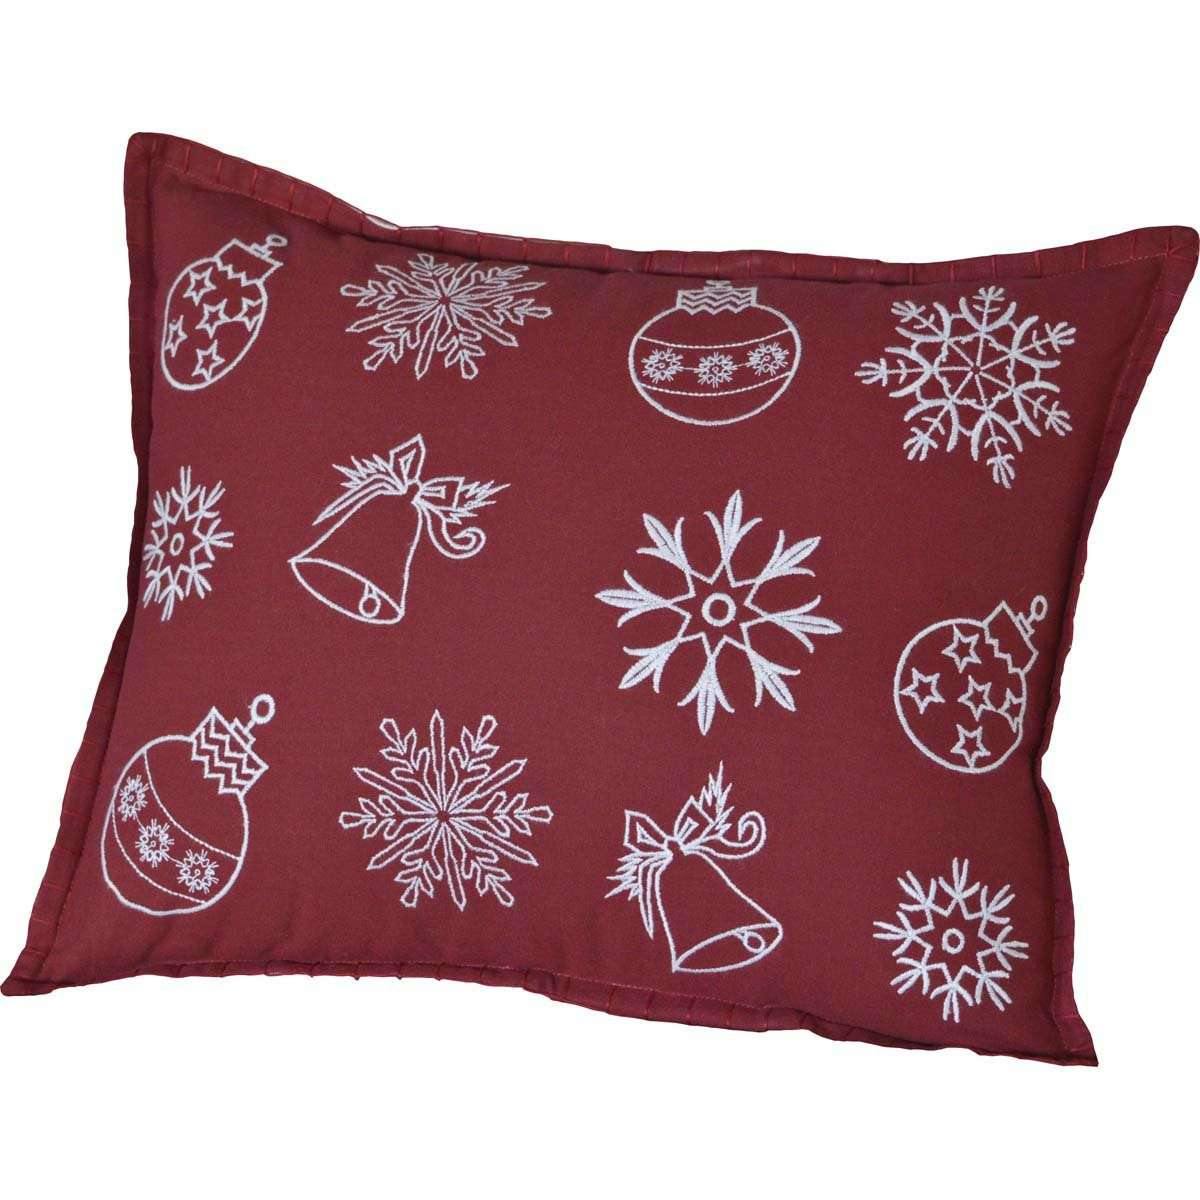 Snow Ornaments Pillow 14x18 - The Fox Decor